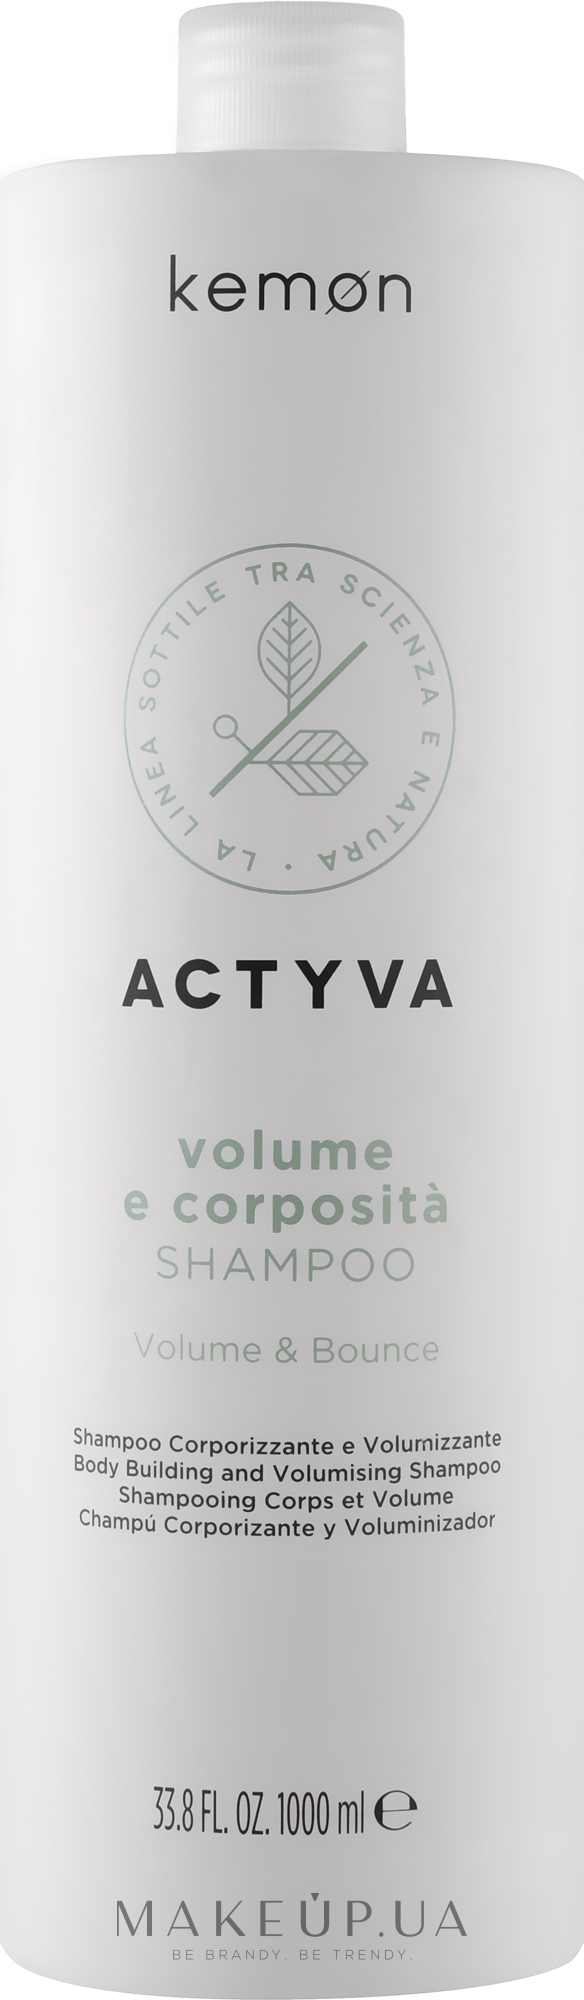 Шампунь для придания волосам объема - Kemon Actyva Volume e Corposita Shampoo — фото 1000ml